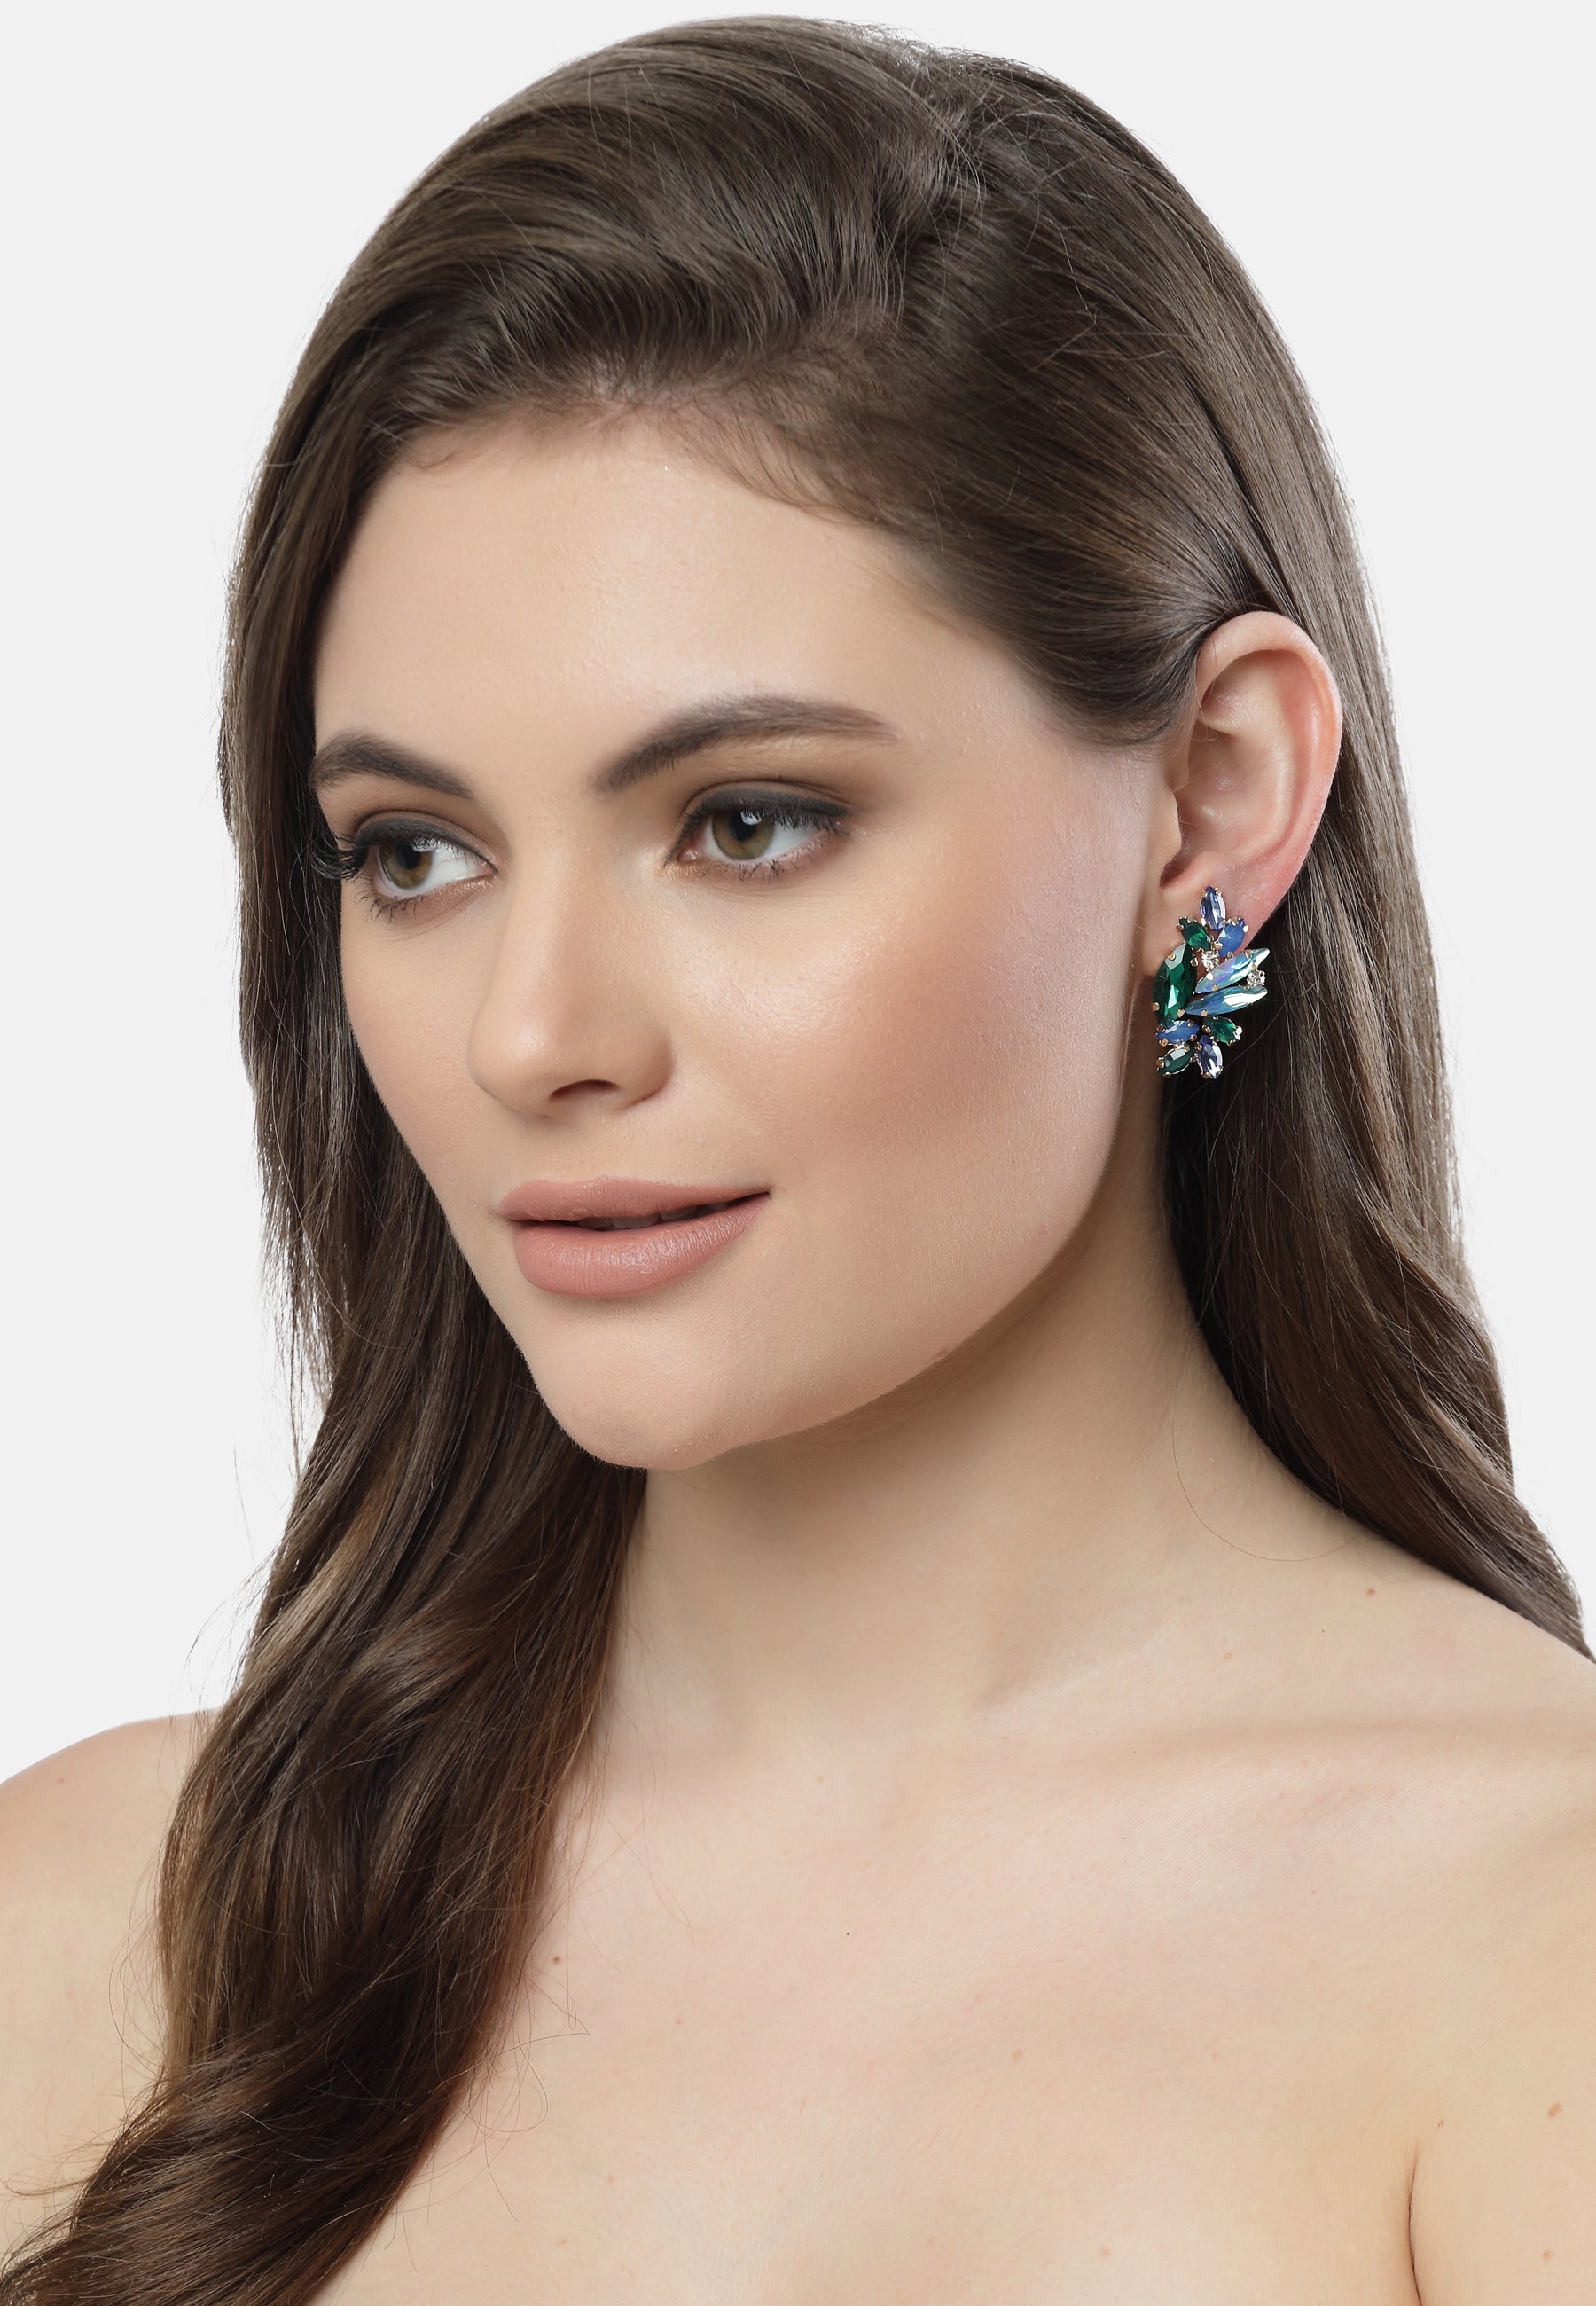 Criostail Studded Earrings